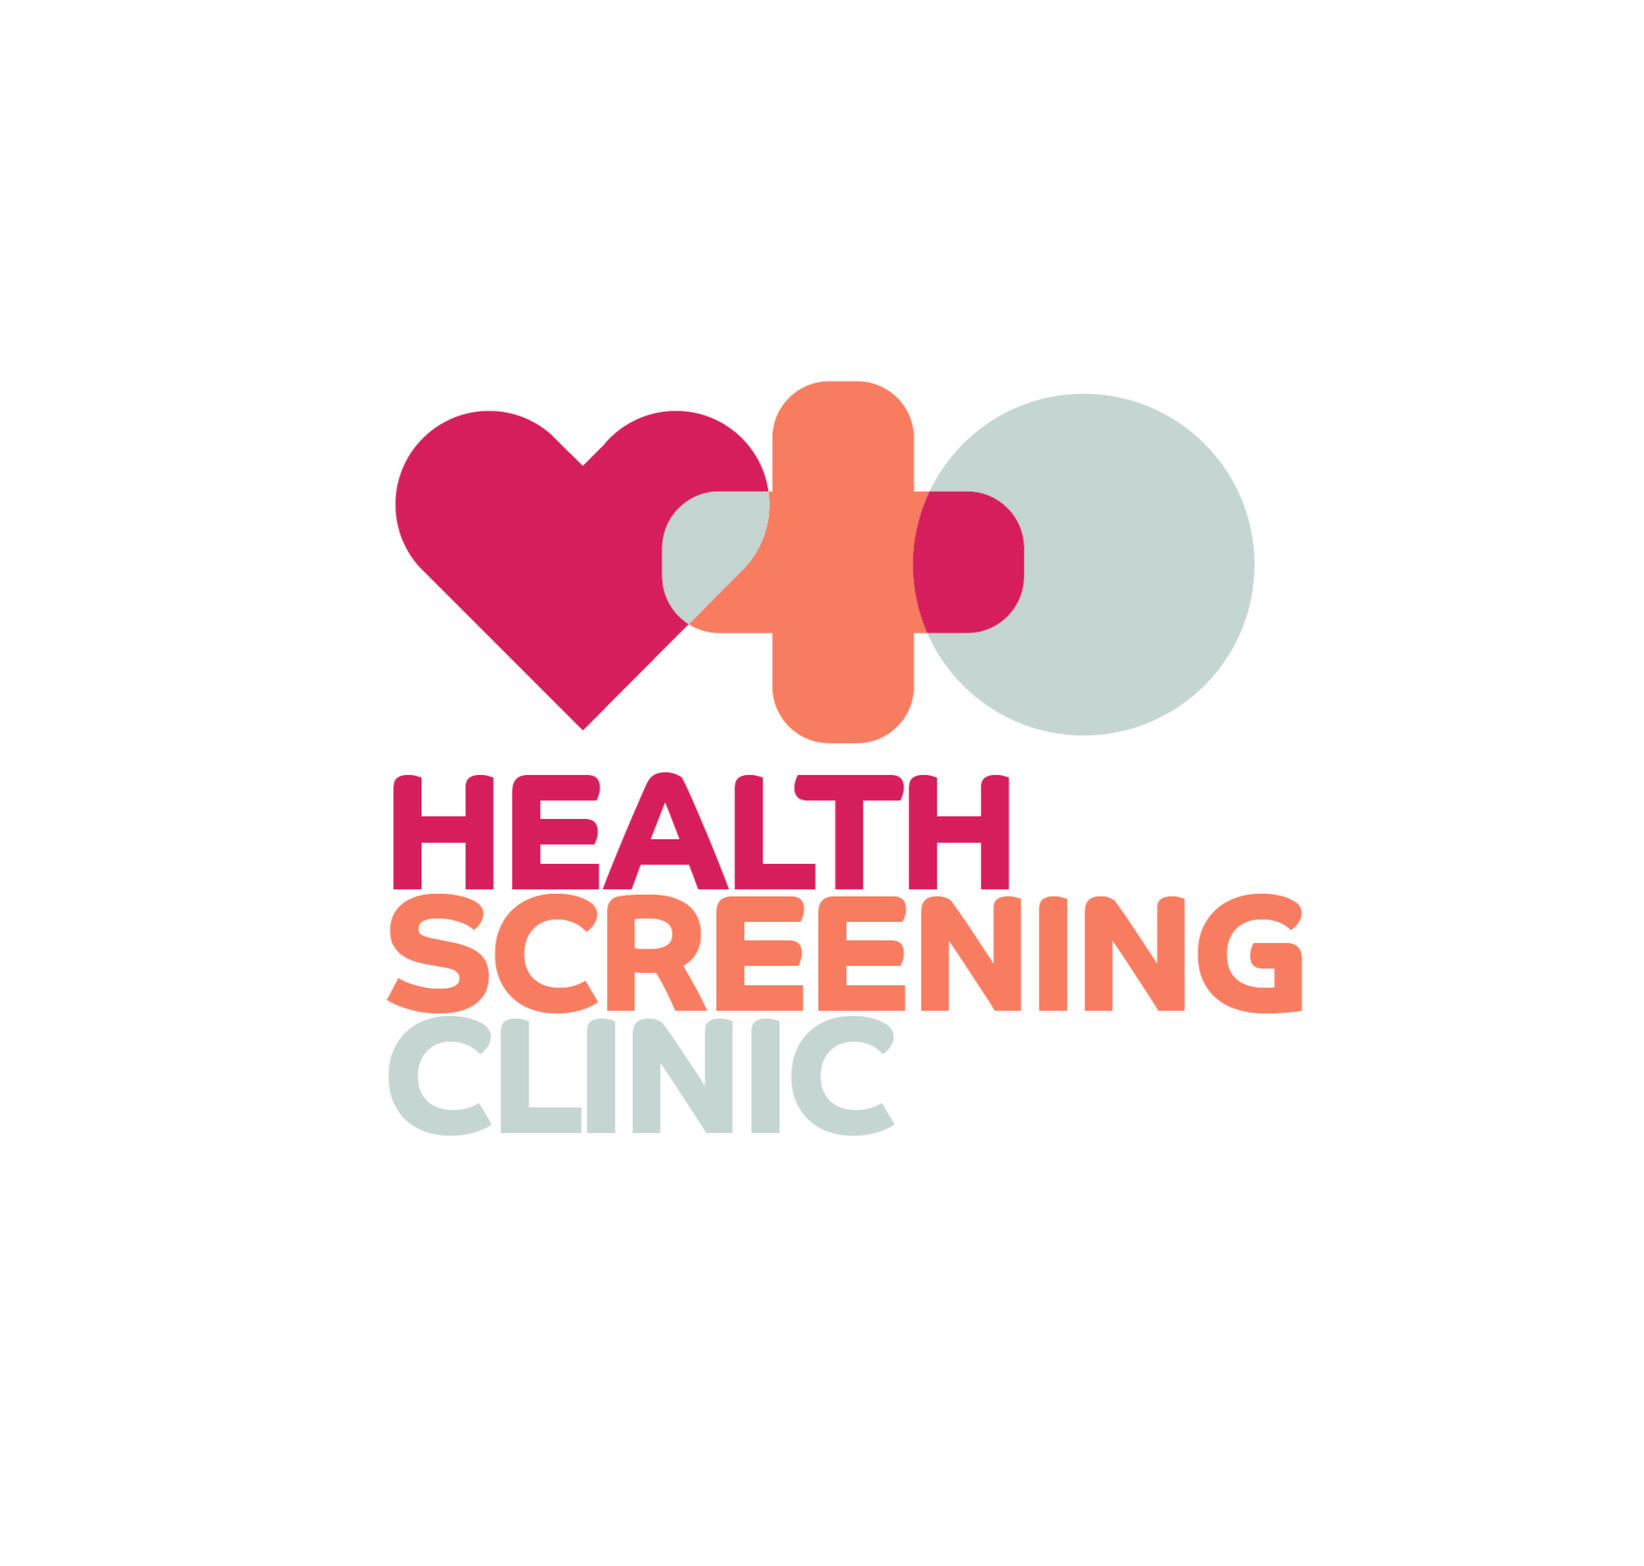 Health screen clinic logo development